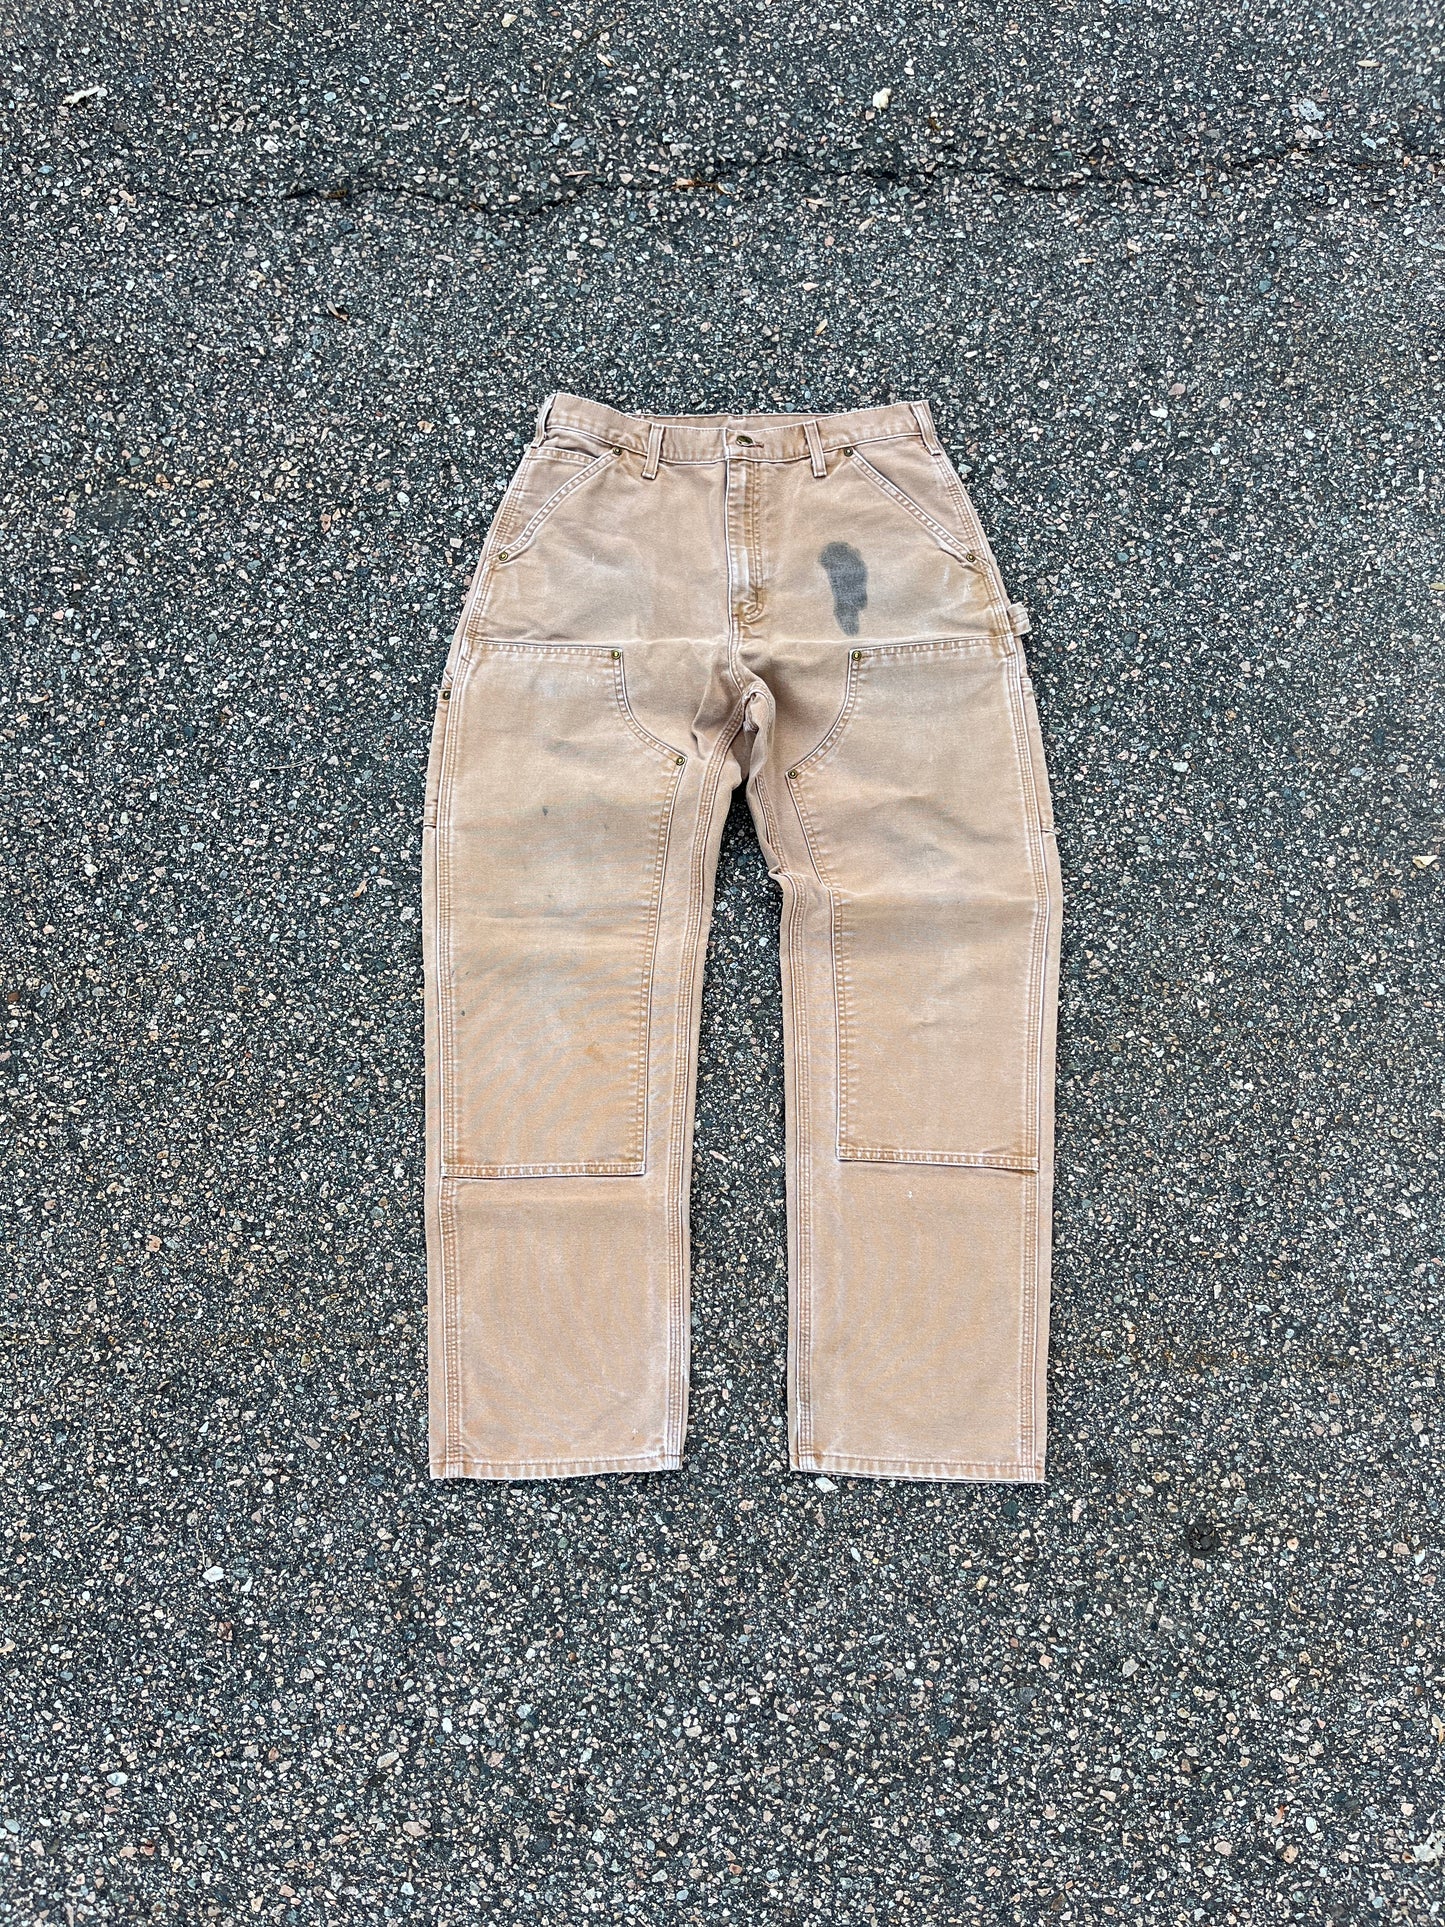 Faded Tan Carhartt Double Knee Pants - 31 x 31